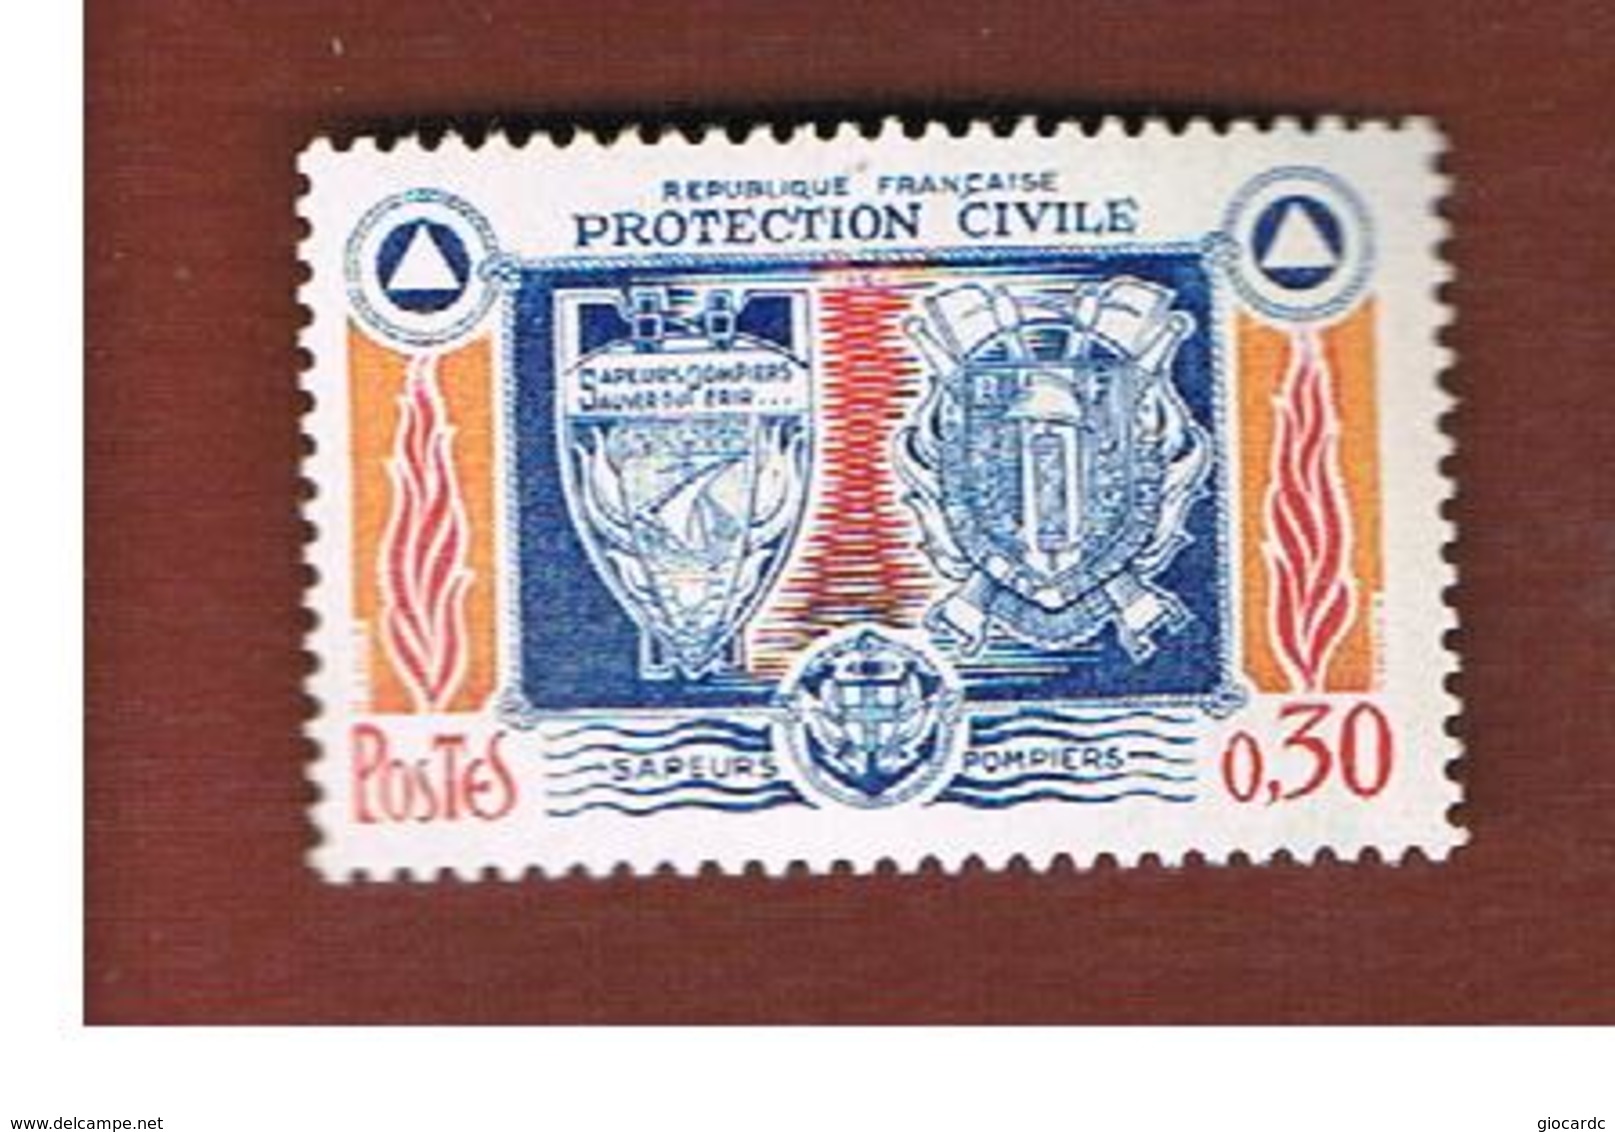 FRANCIA  (FRANCE)      -  SG  1631  -  1964 CIVIL PROTECTION     - MINT ** - Ungebraucht